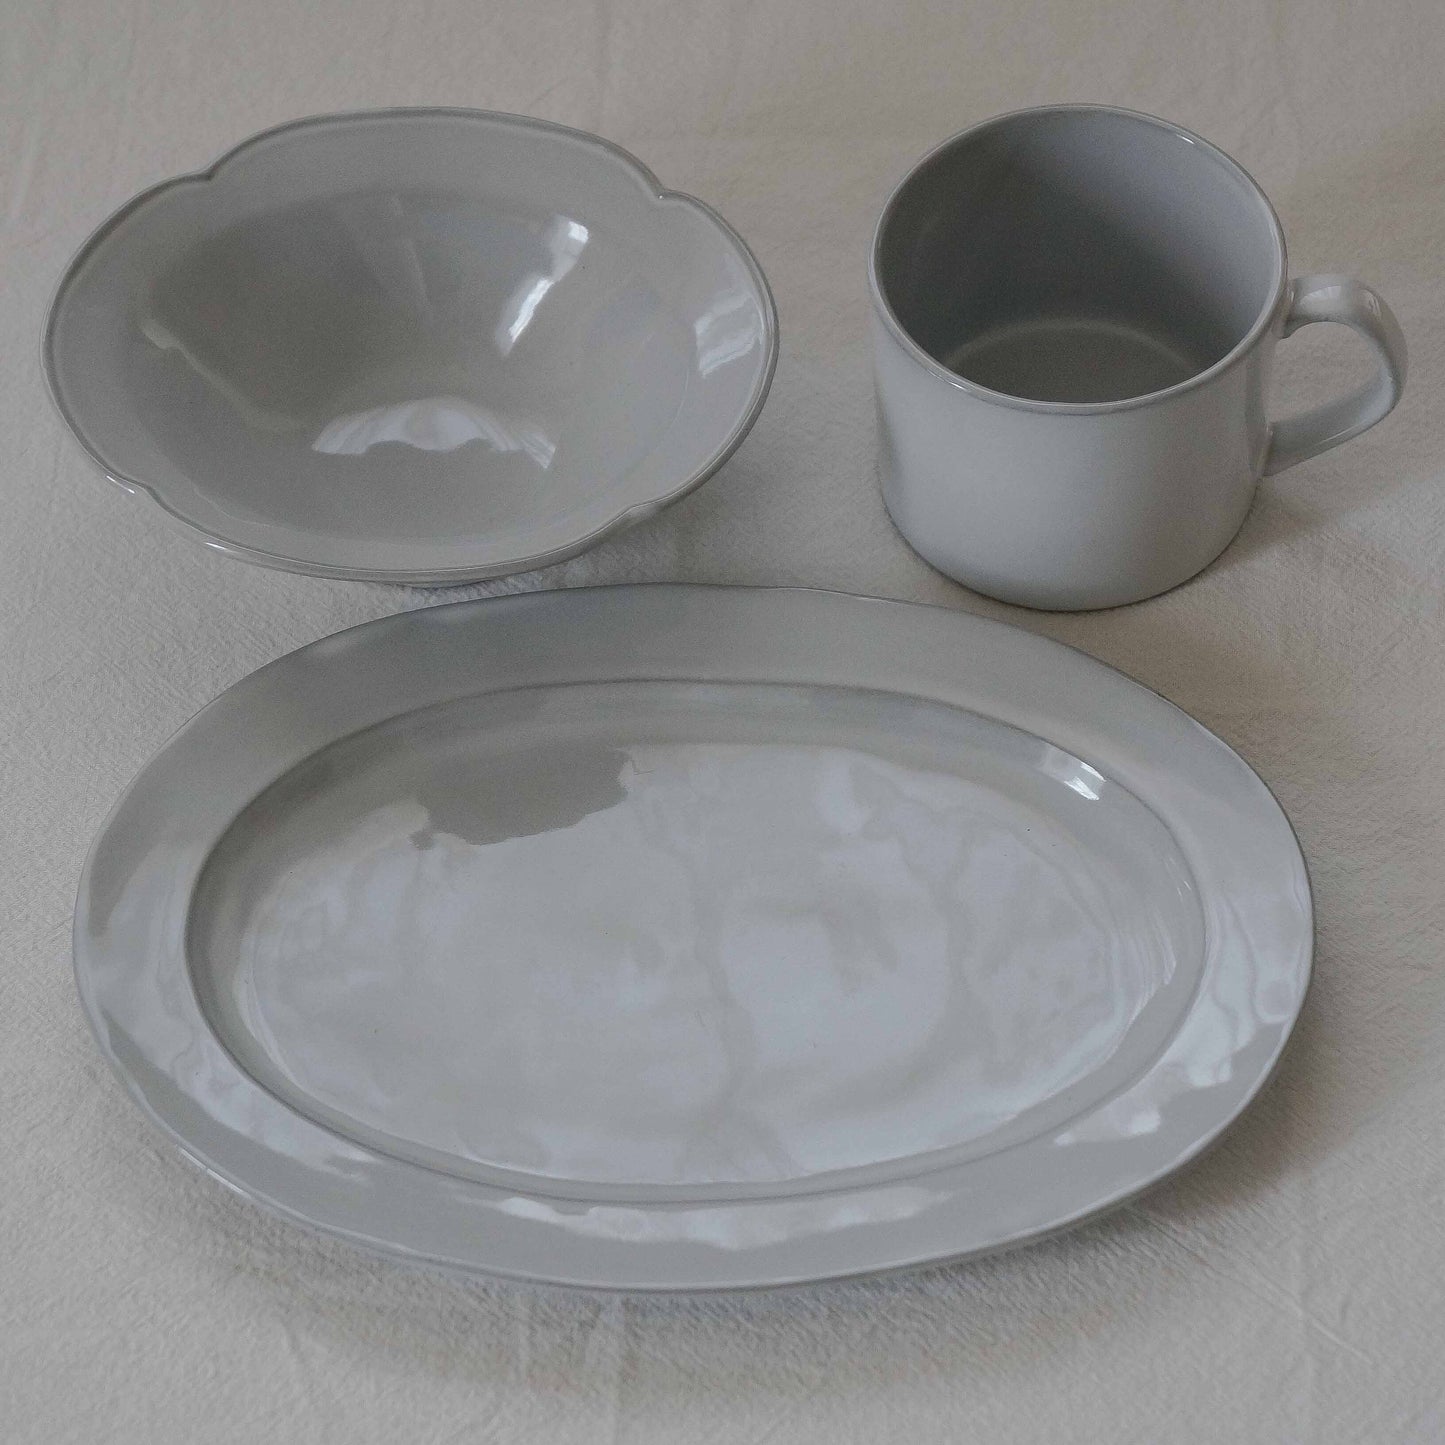 Oval Plate - Tamaki Calin Series